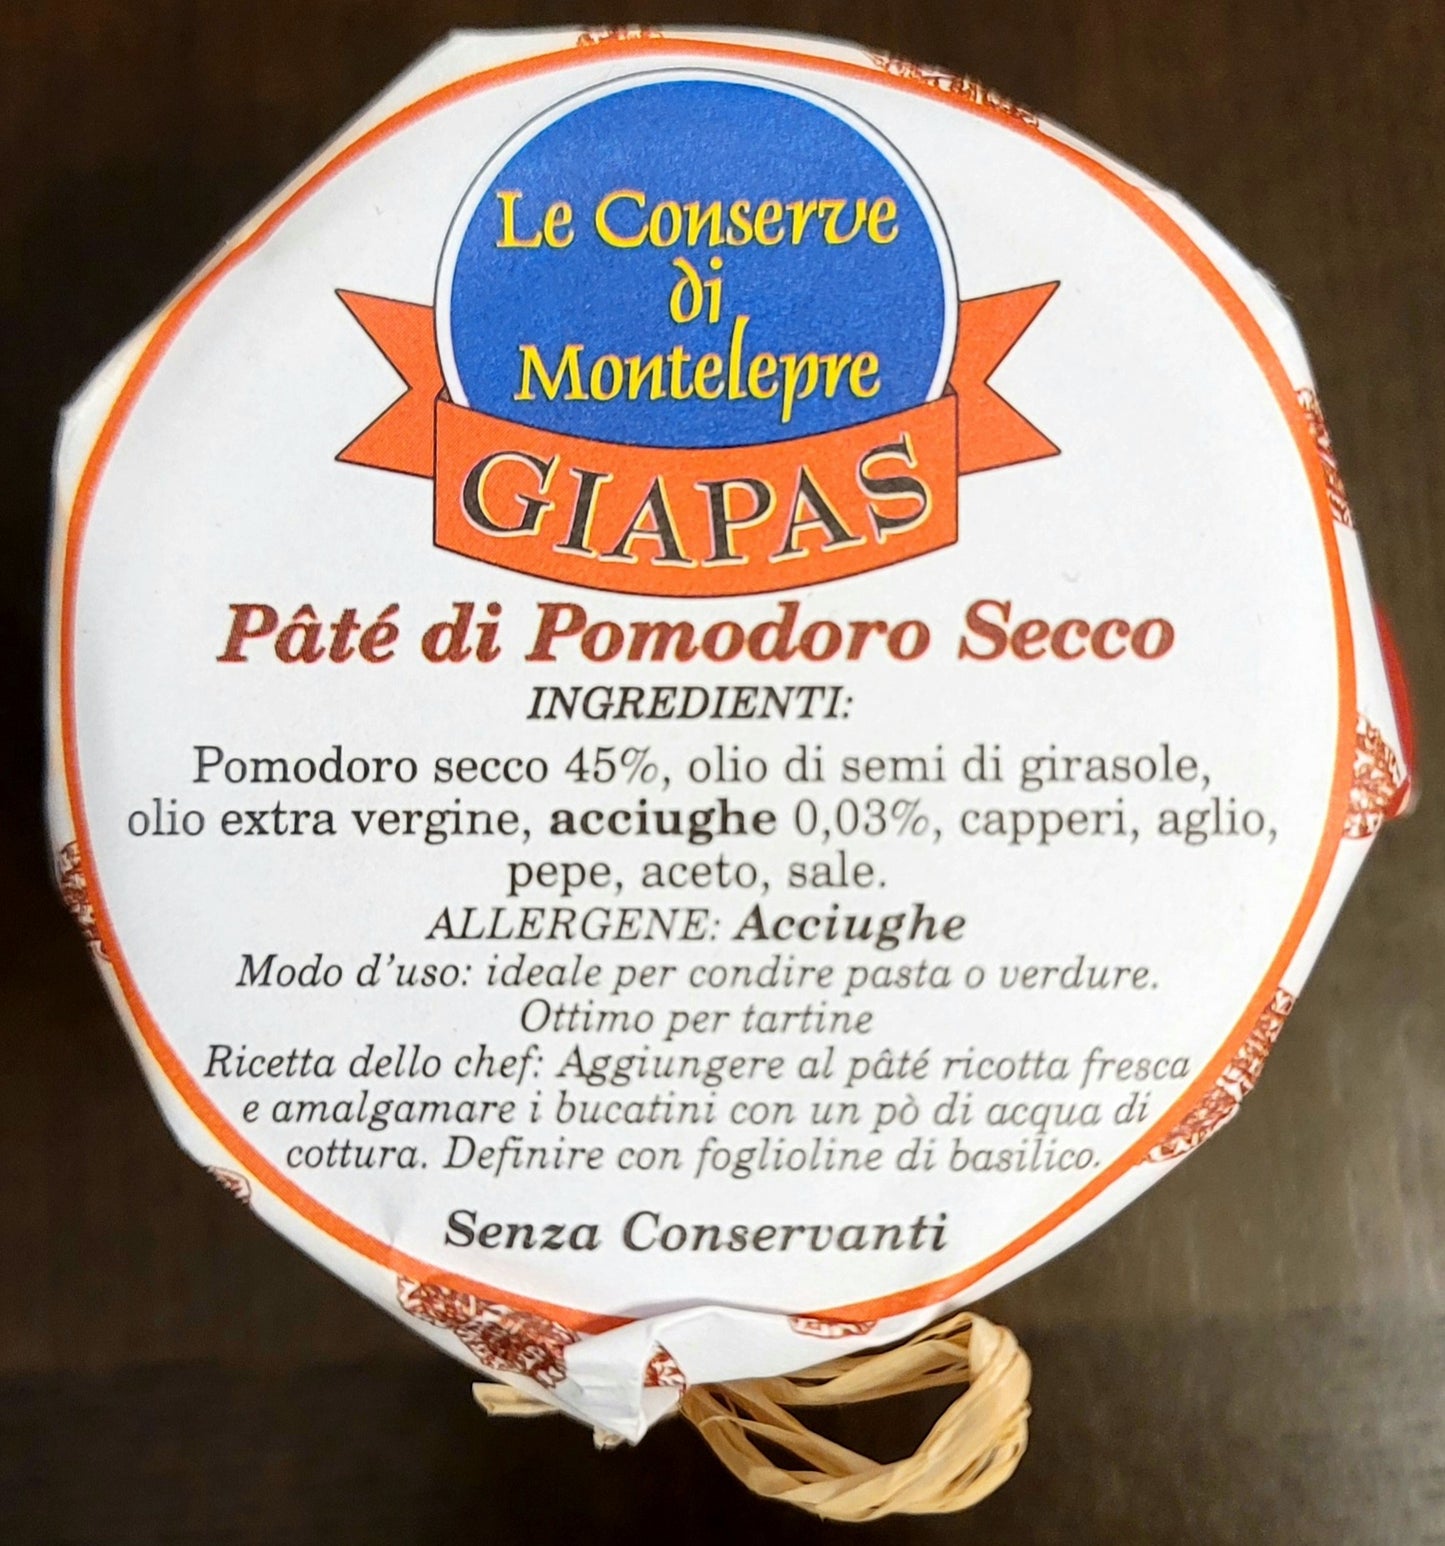 Giapas Le Conserve Di Montelepre Sicilian Sun-dried Tomato Paté